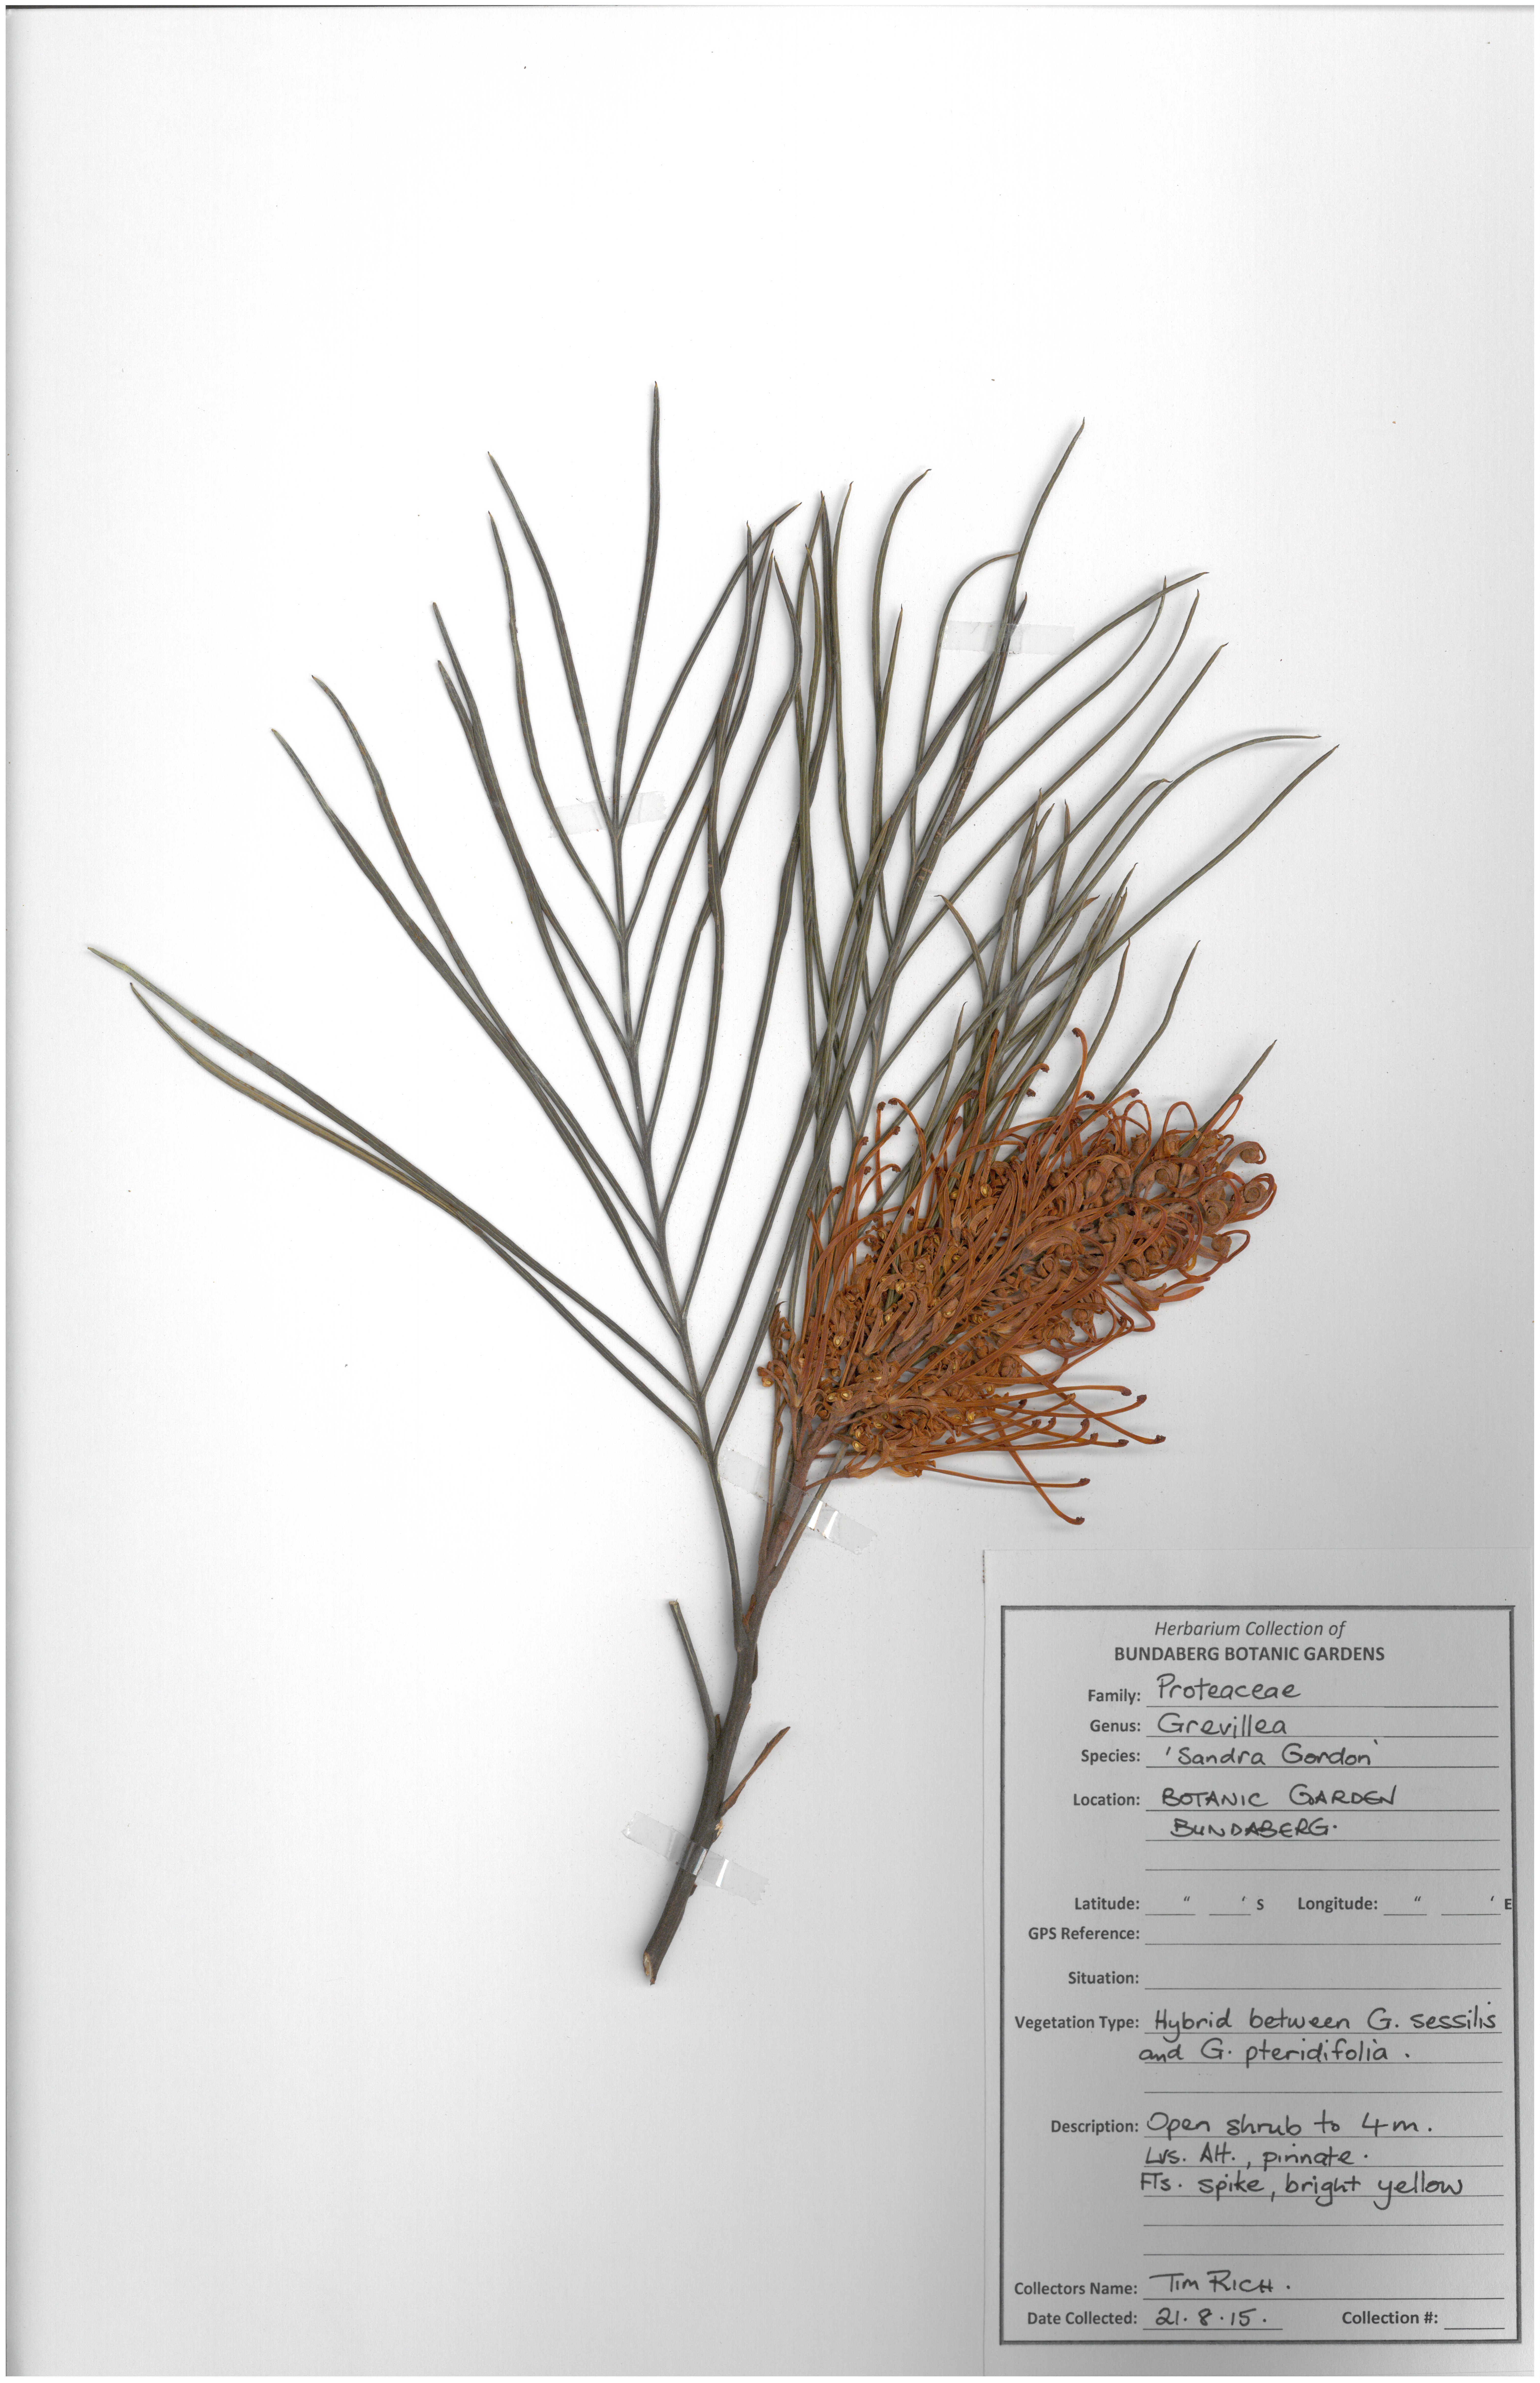 Proteaceae grevillea sandra gordon